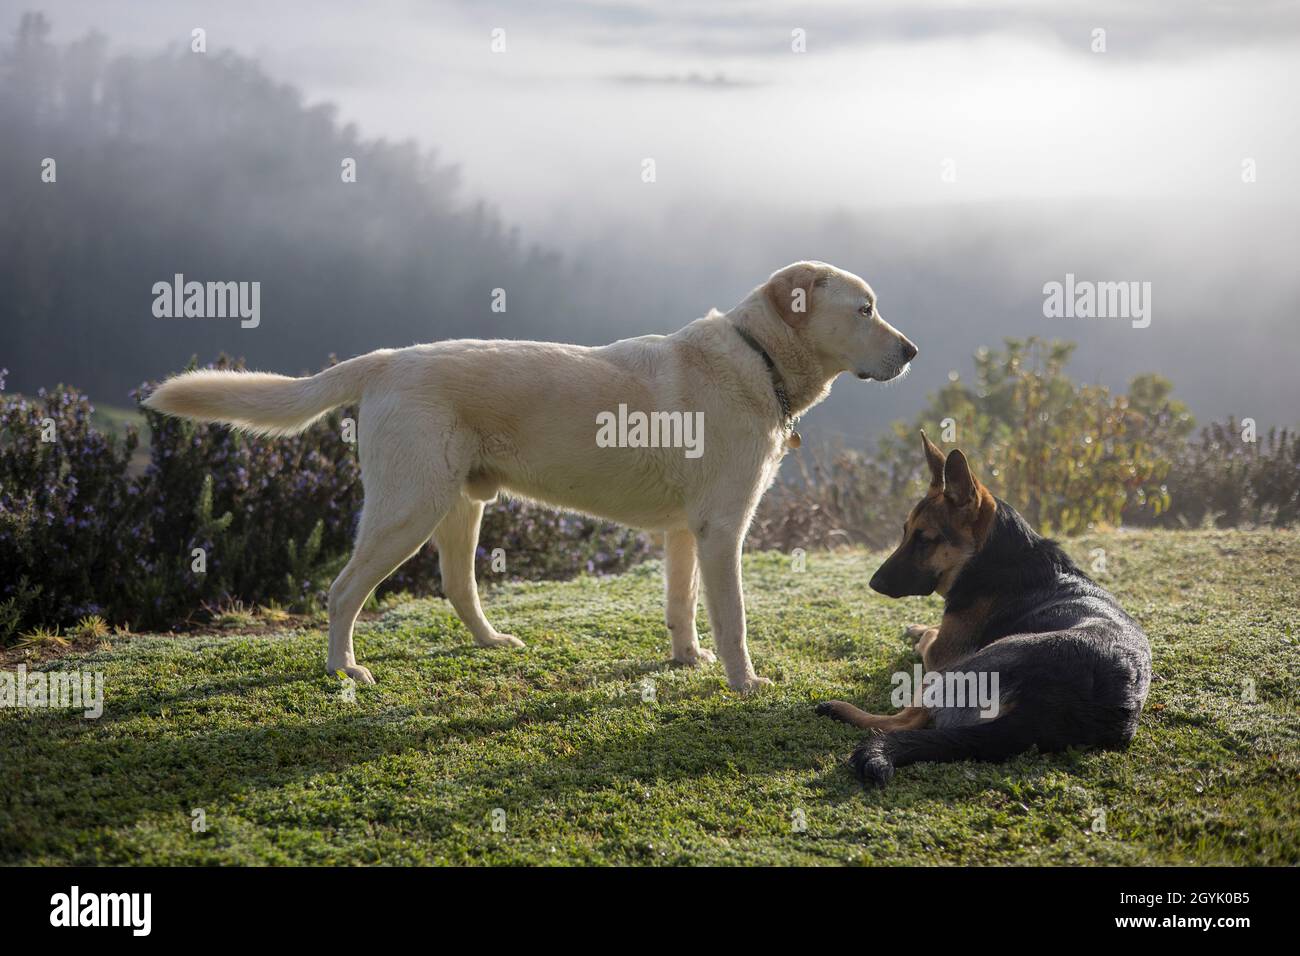 Labrador and German Shepherd playing together Stock Photo